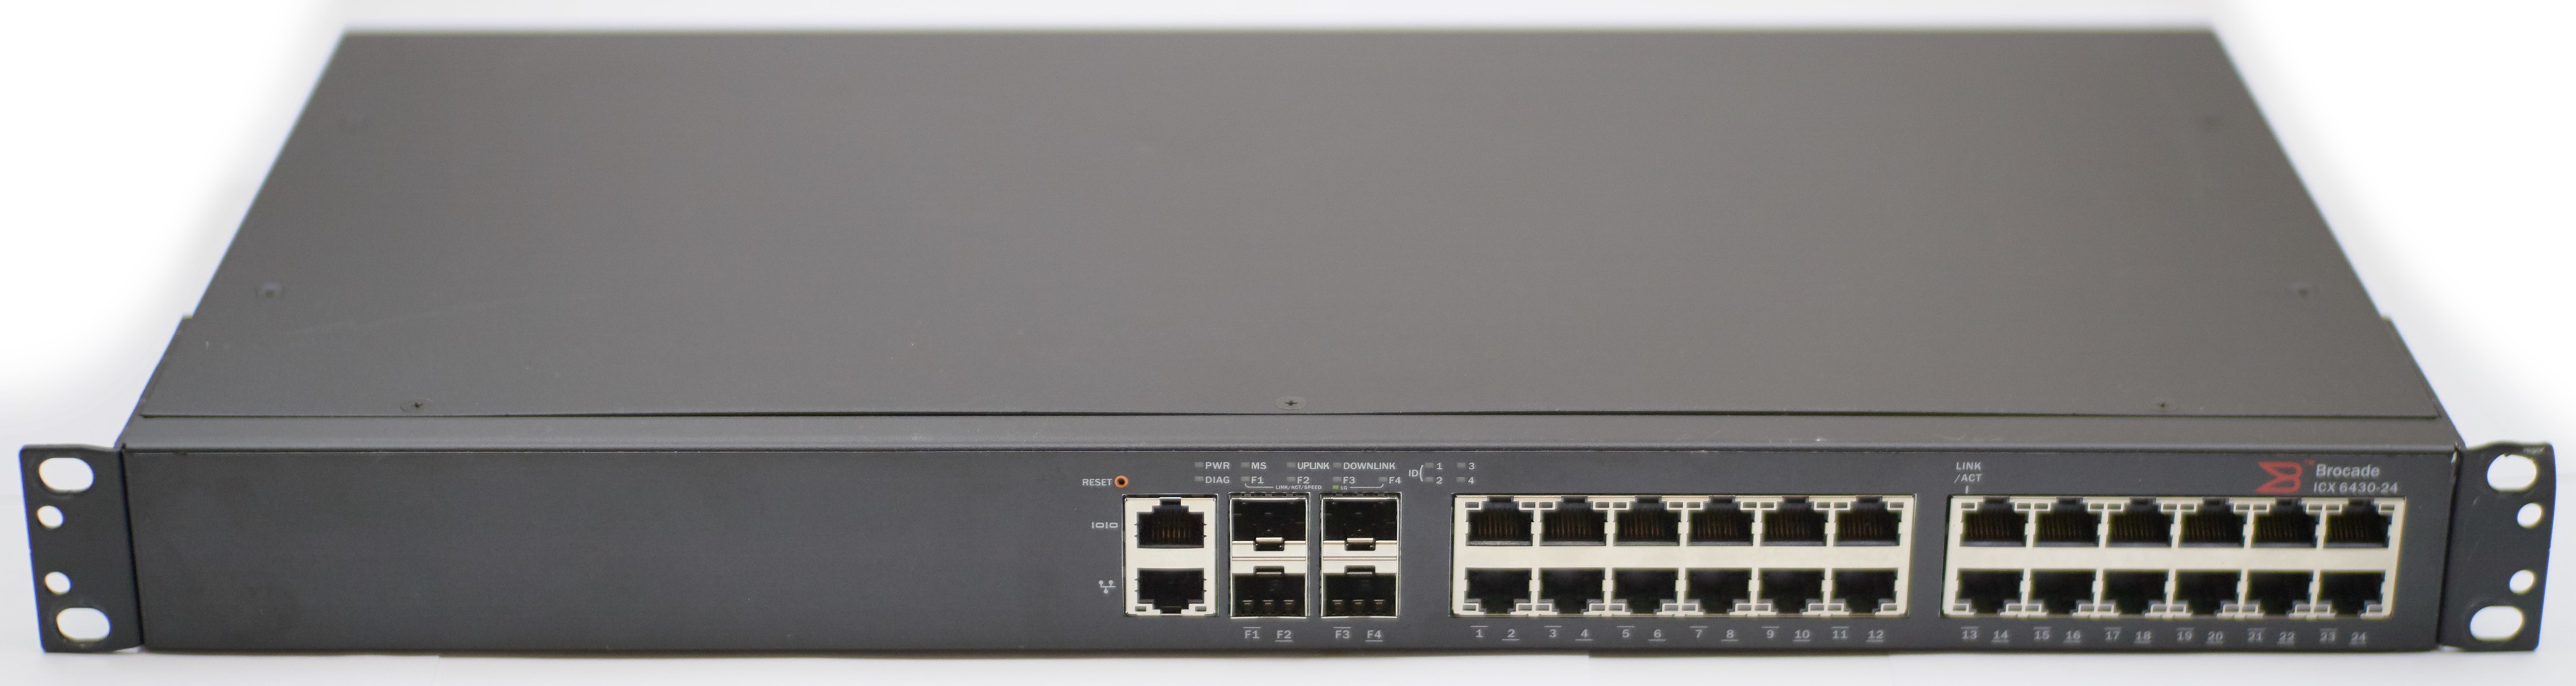 Brocade ICX 6430-24 - 24 Port 1Gbps RJ-45, 4 Port 1GbE SFP Gigabit Switch